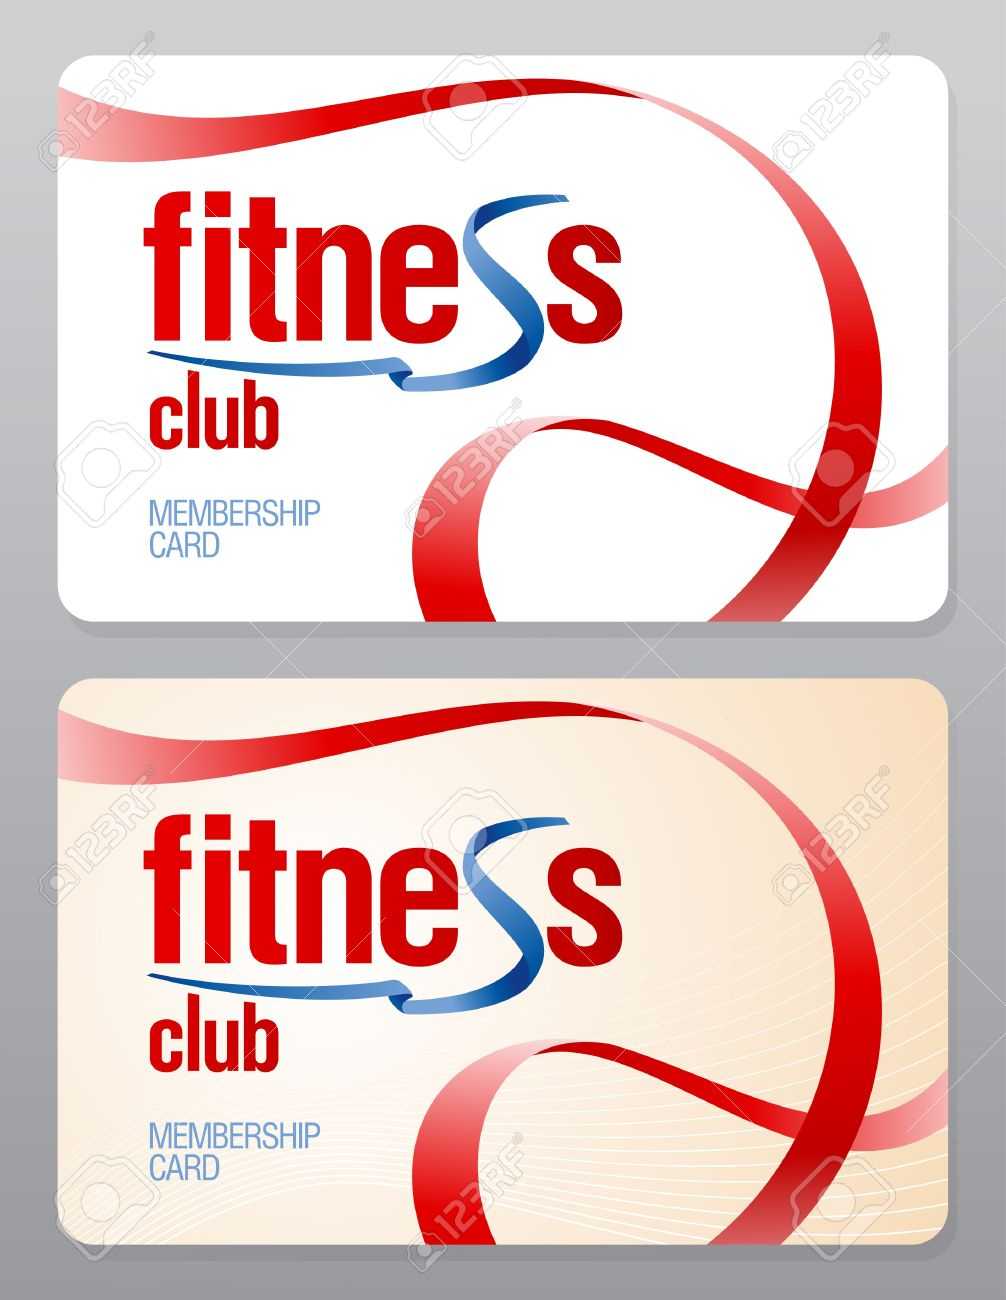 Fitness Club Membership Card Design Template. With Gym Membership Card Template